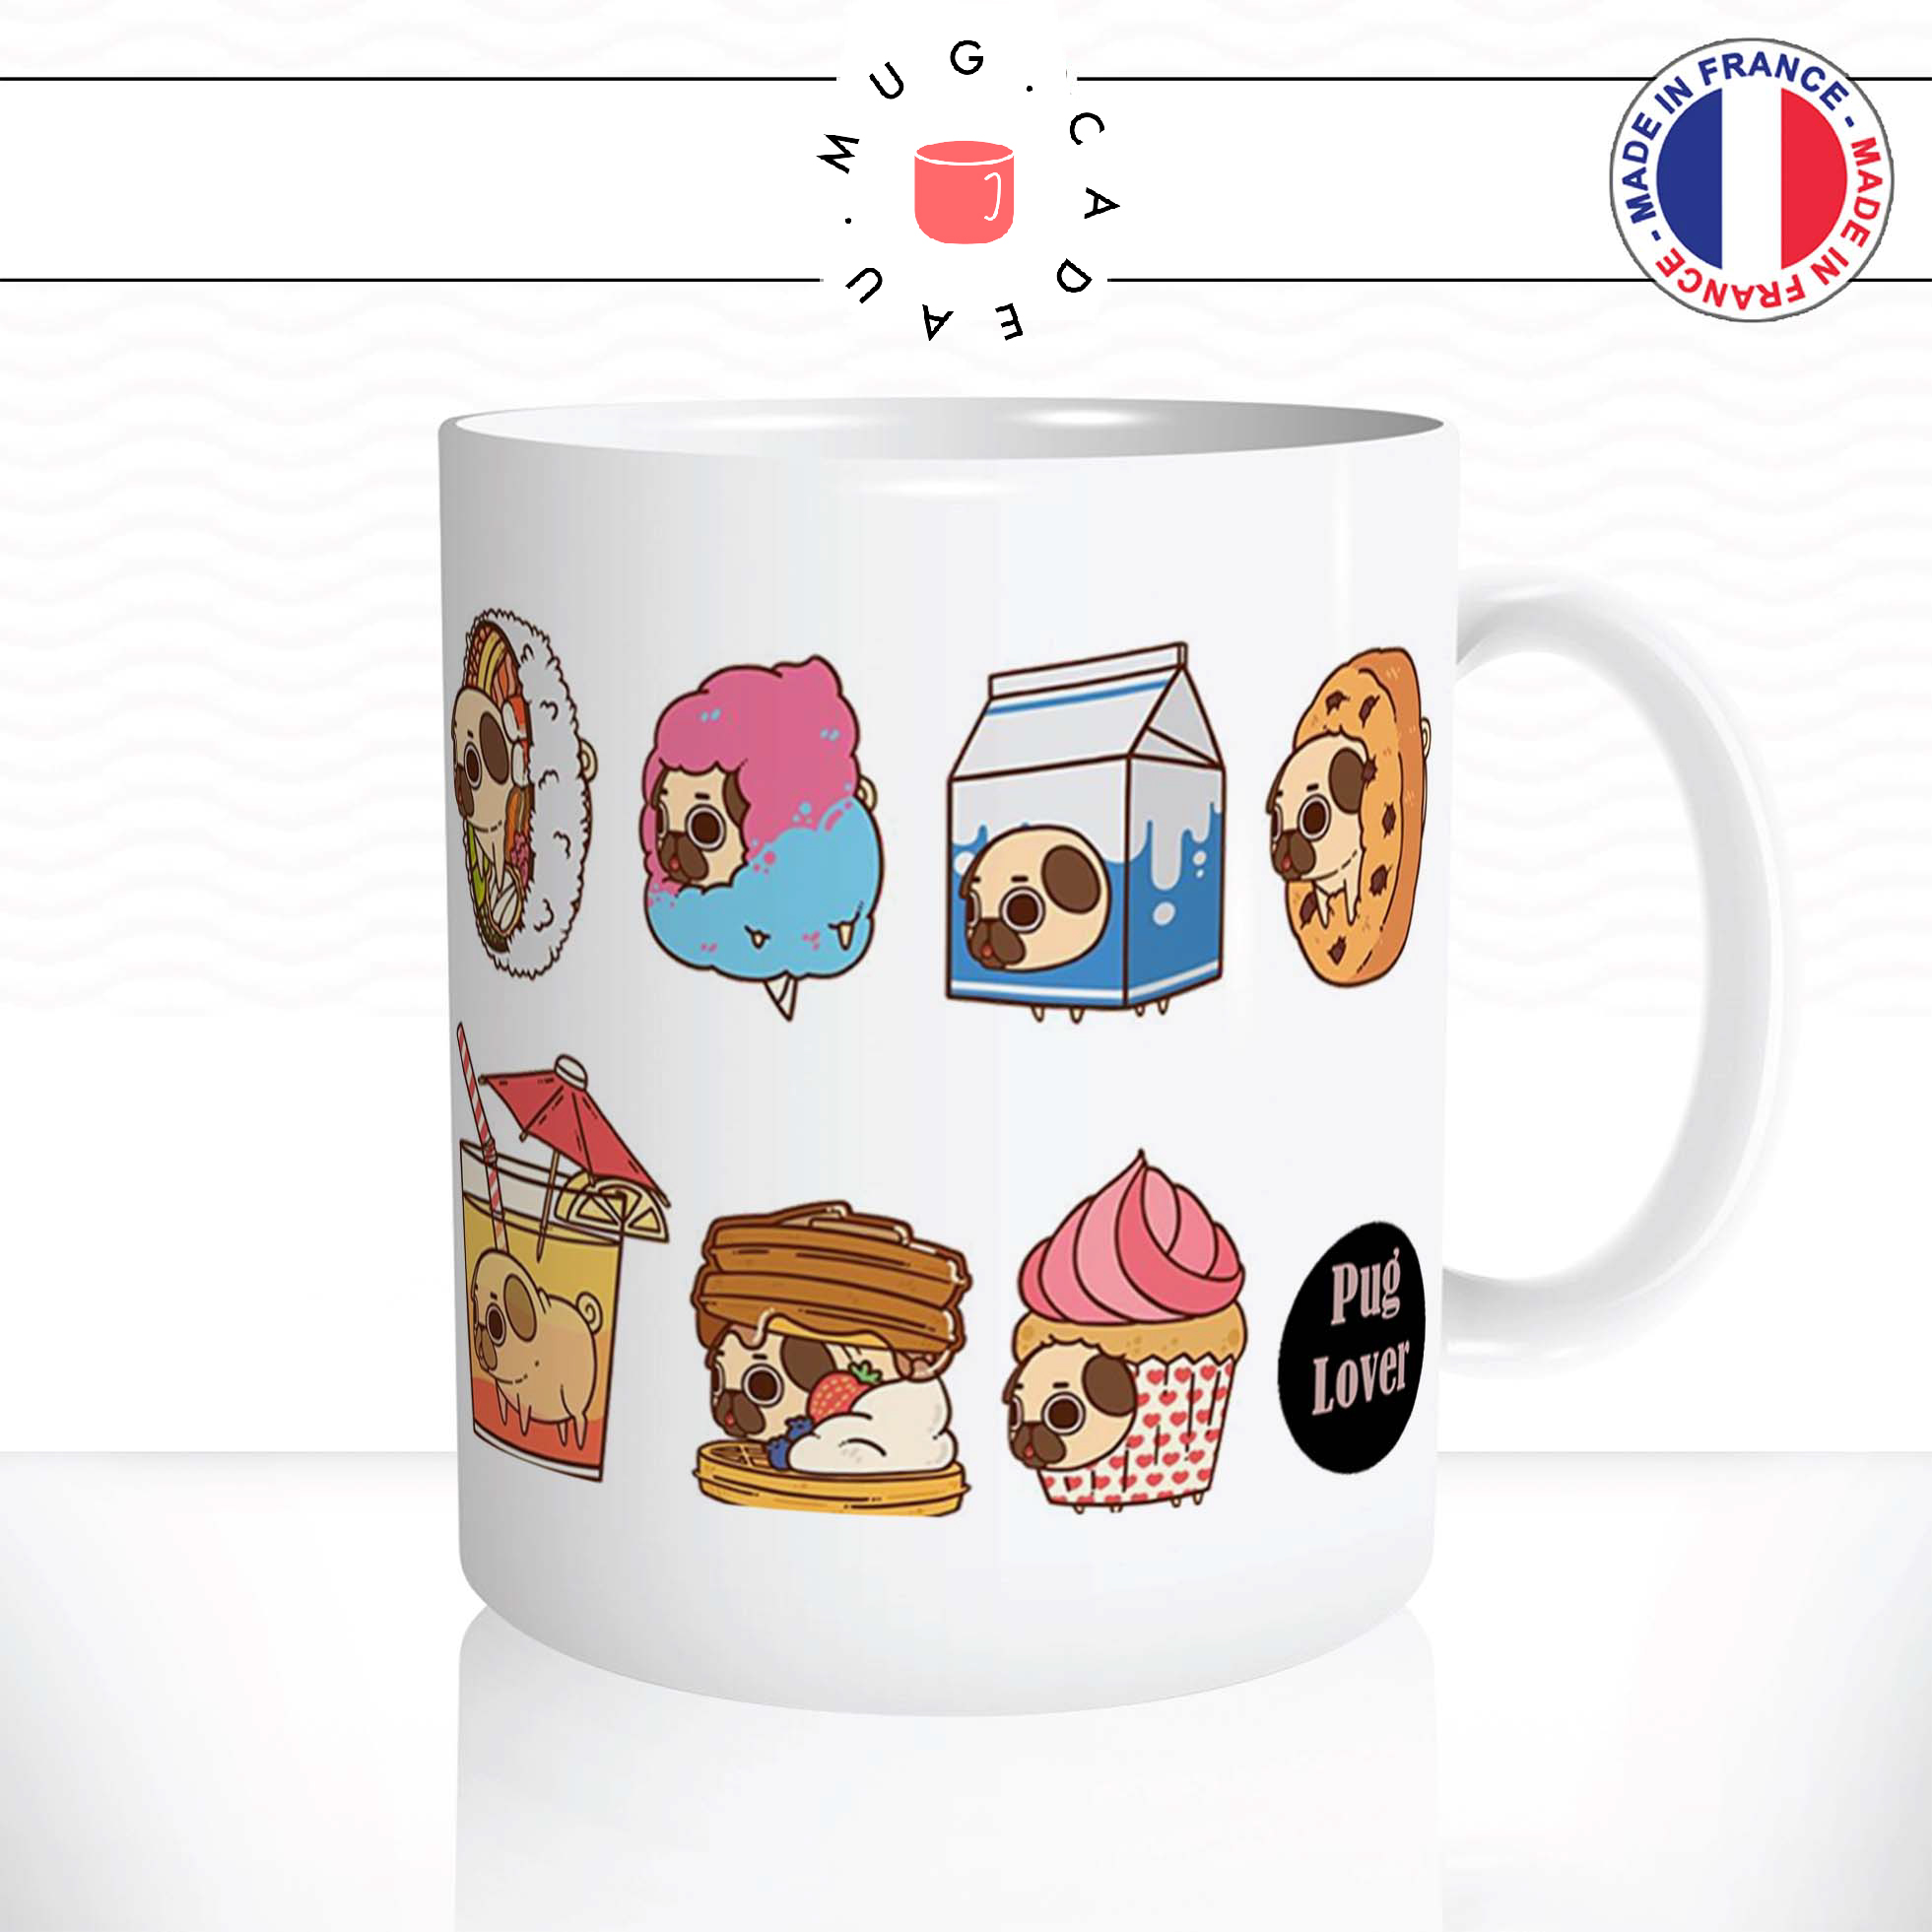 mug-tasse-ref4-chiens-pug-carlin-food-cafe-the-mugs-tasses-personnalise-anse-droite